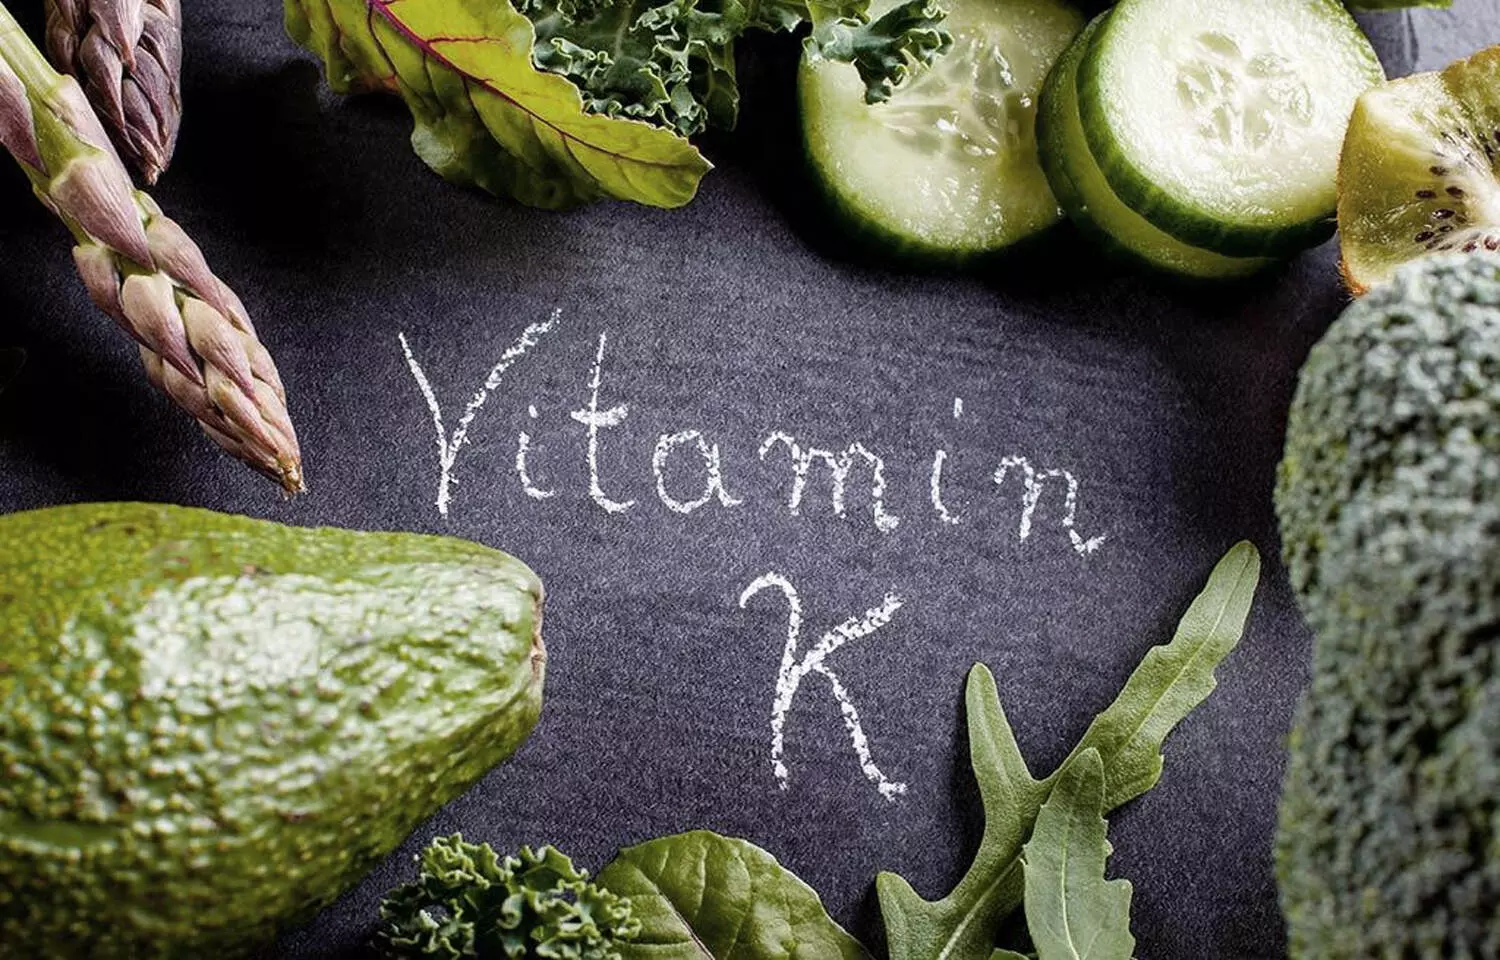 Sufficient vitamin K intake may protect against atherosclerotic CVD: Study